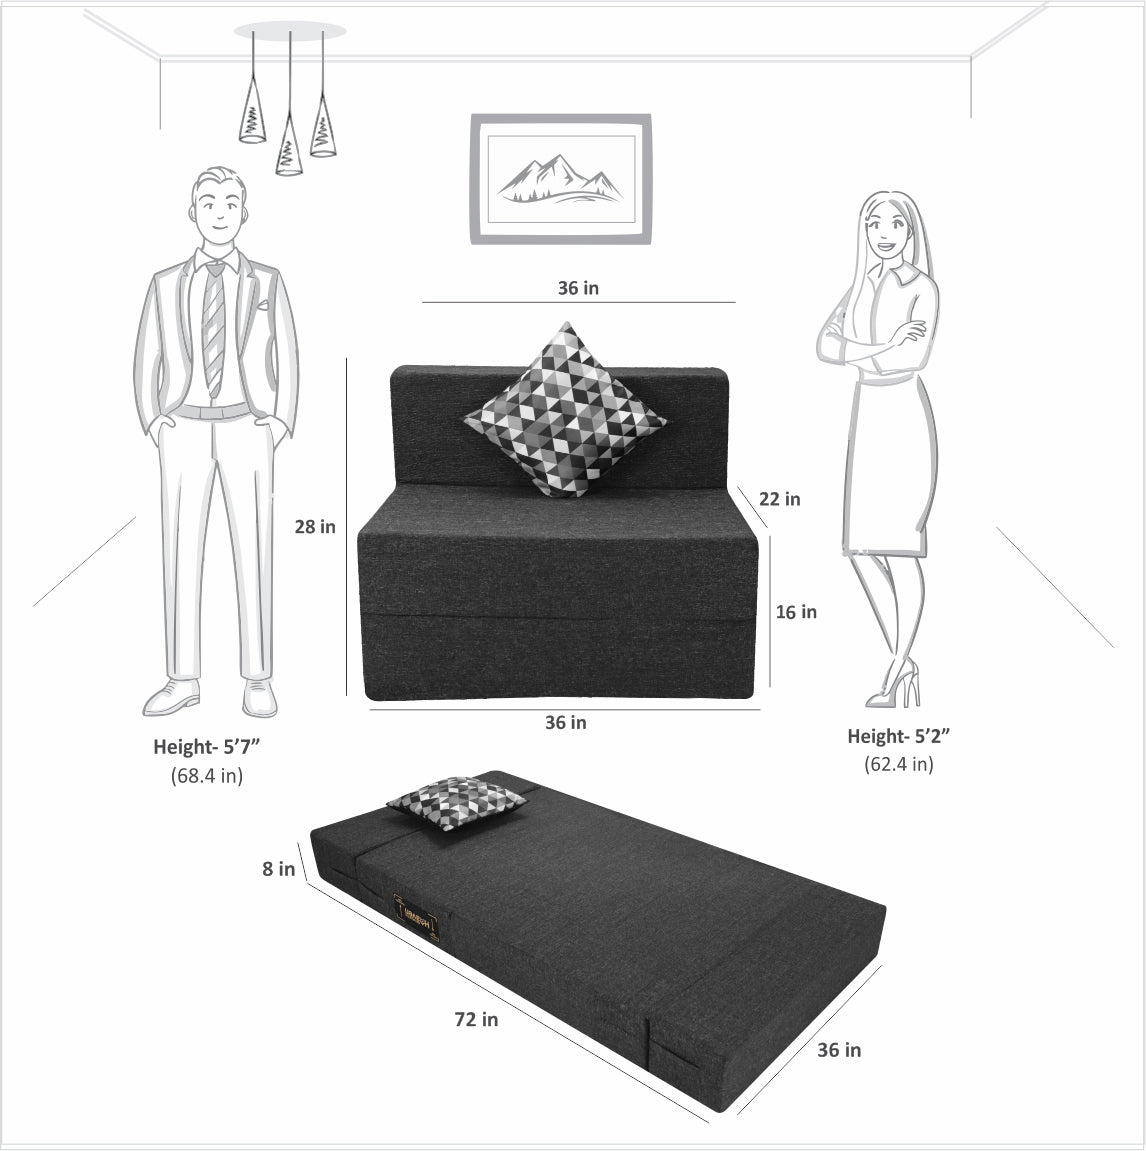 Dark Grey Jute Fabric 6'×3' Sofa cum Bed with 1 Printed Cushion